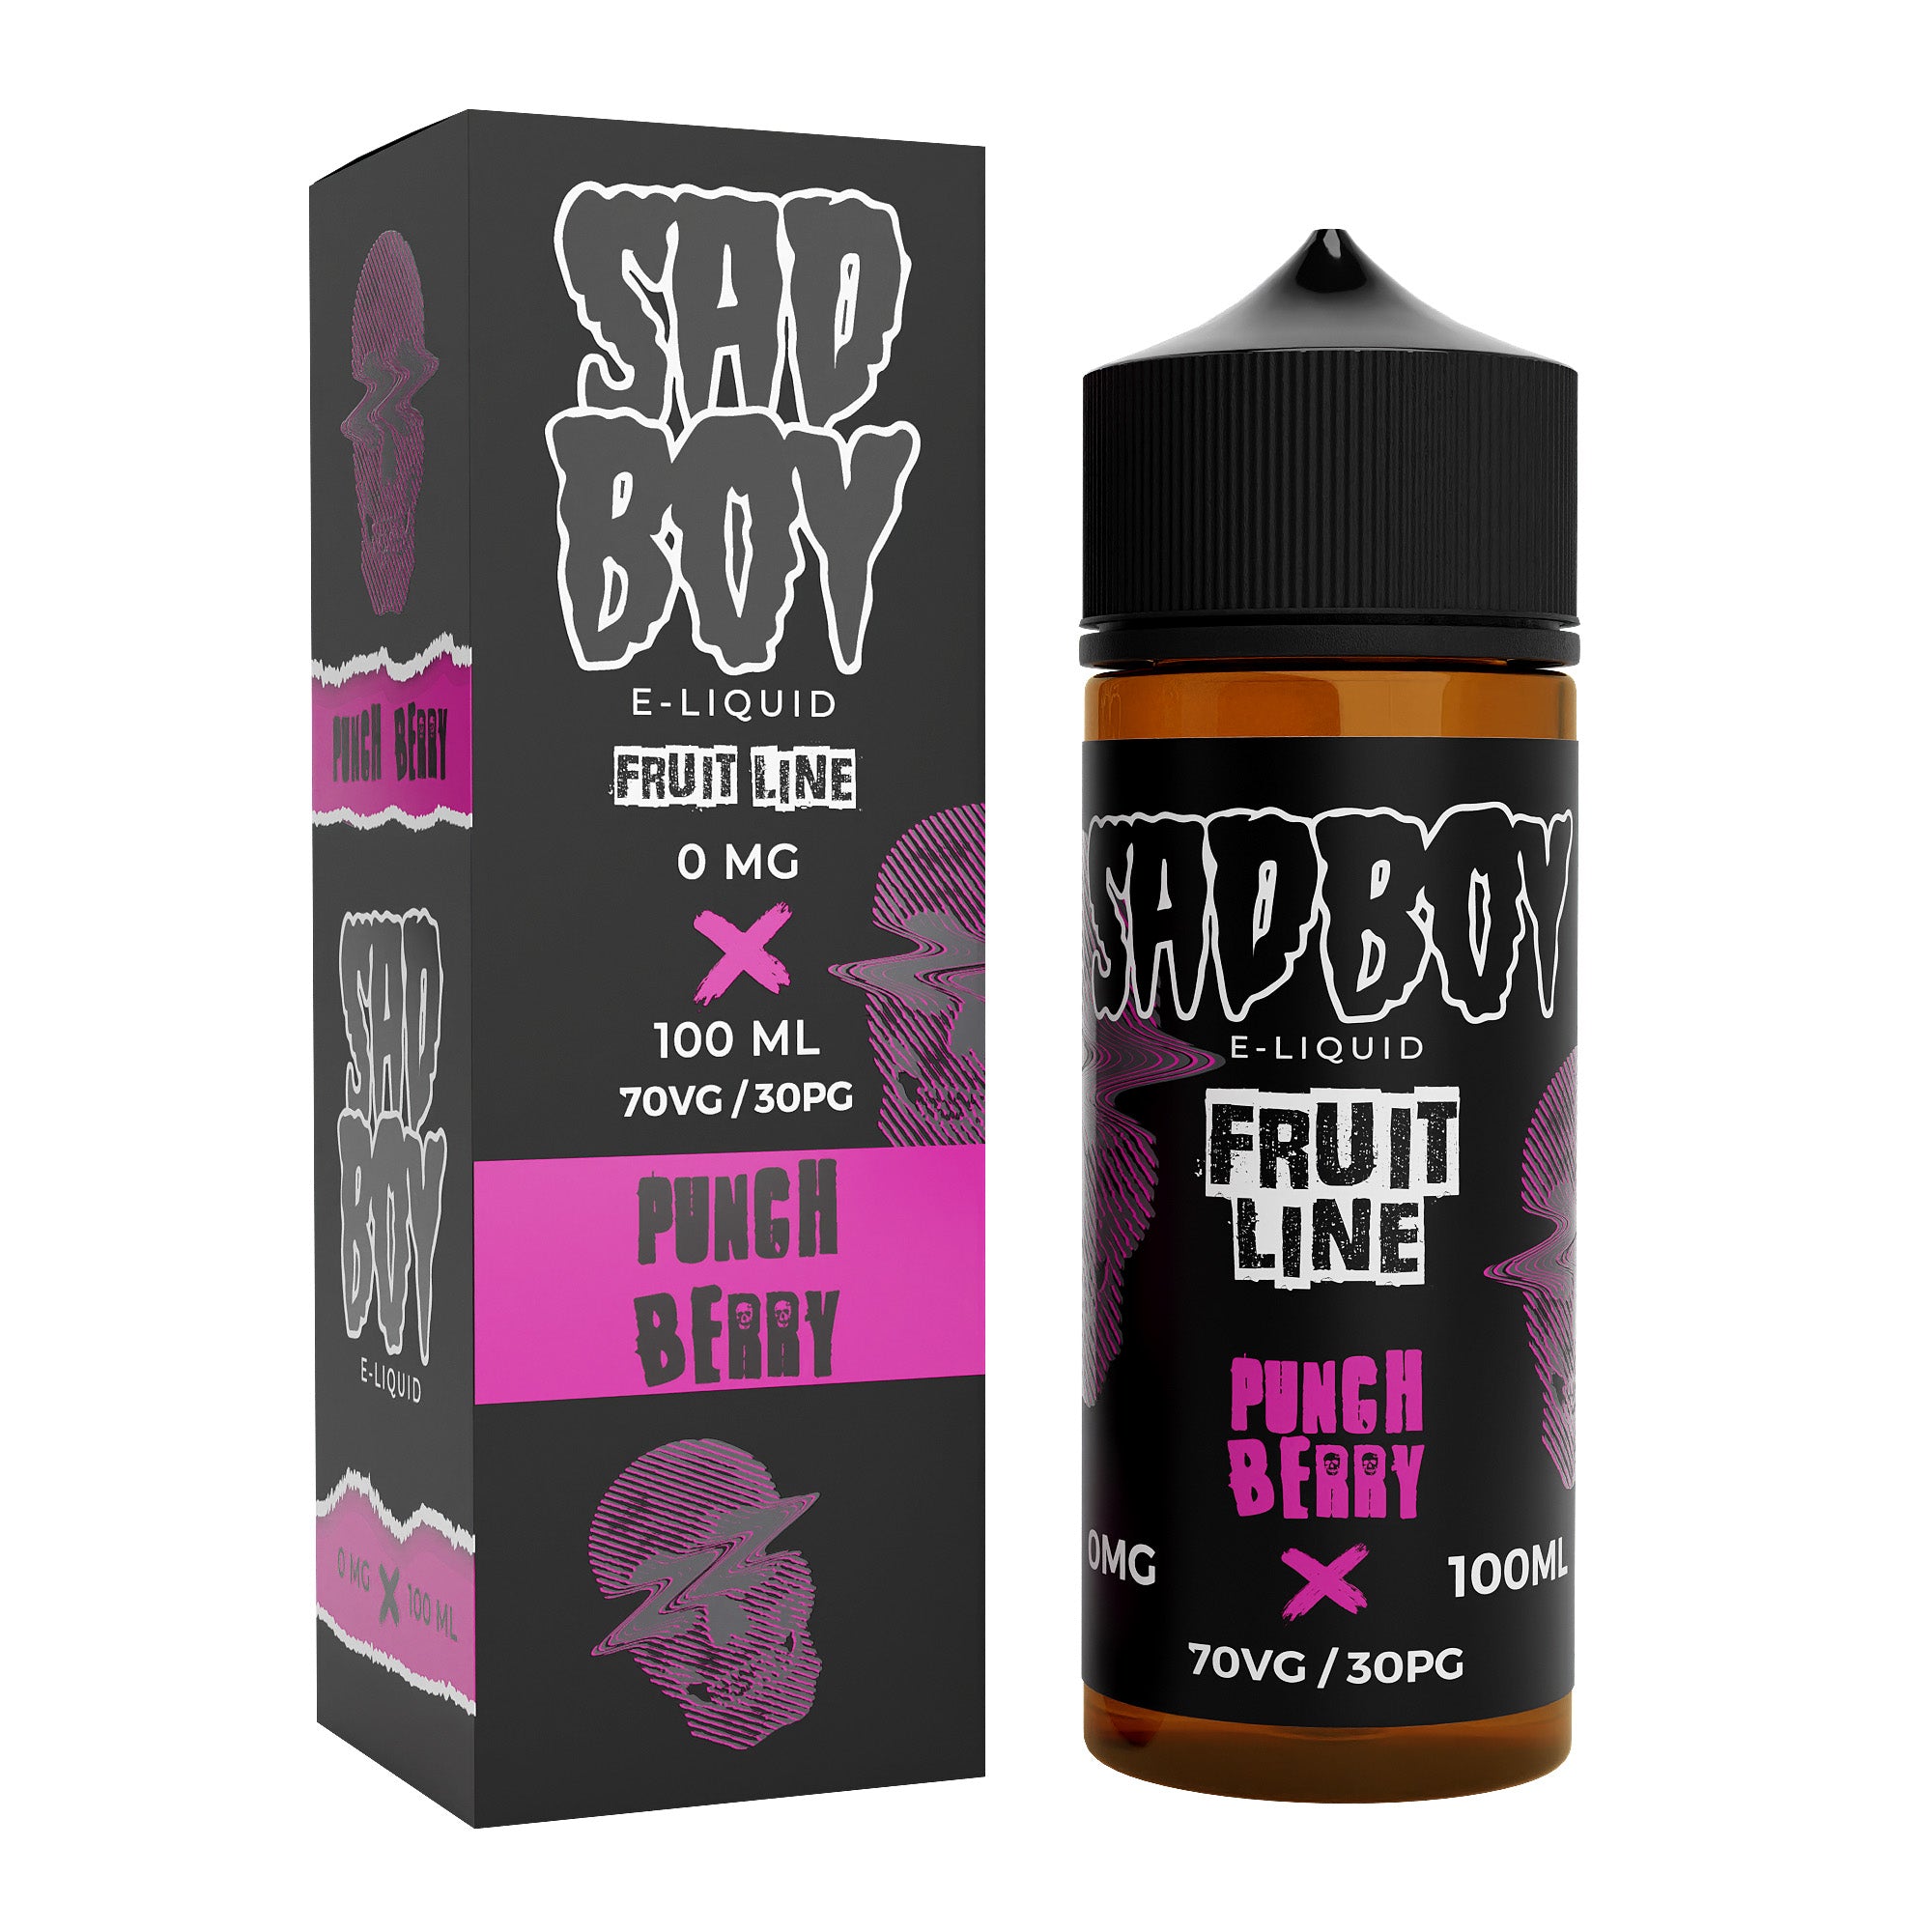 Sadboy Fruit Line: Punch Berry Blood 0mg 100ml Shortfill E-Liquid